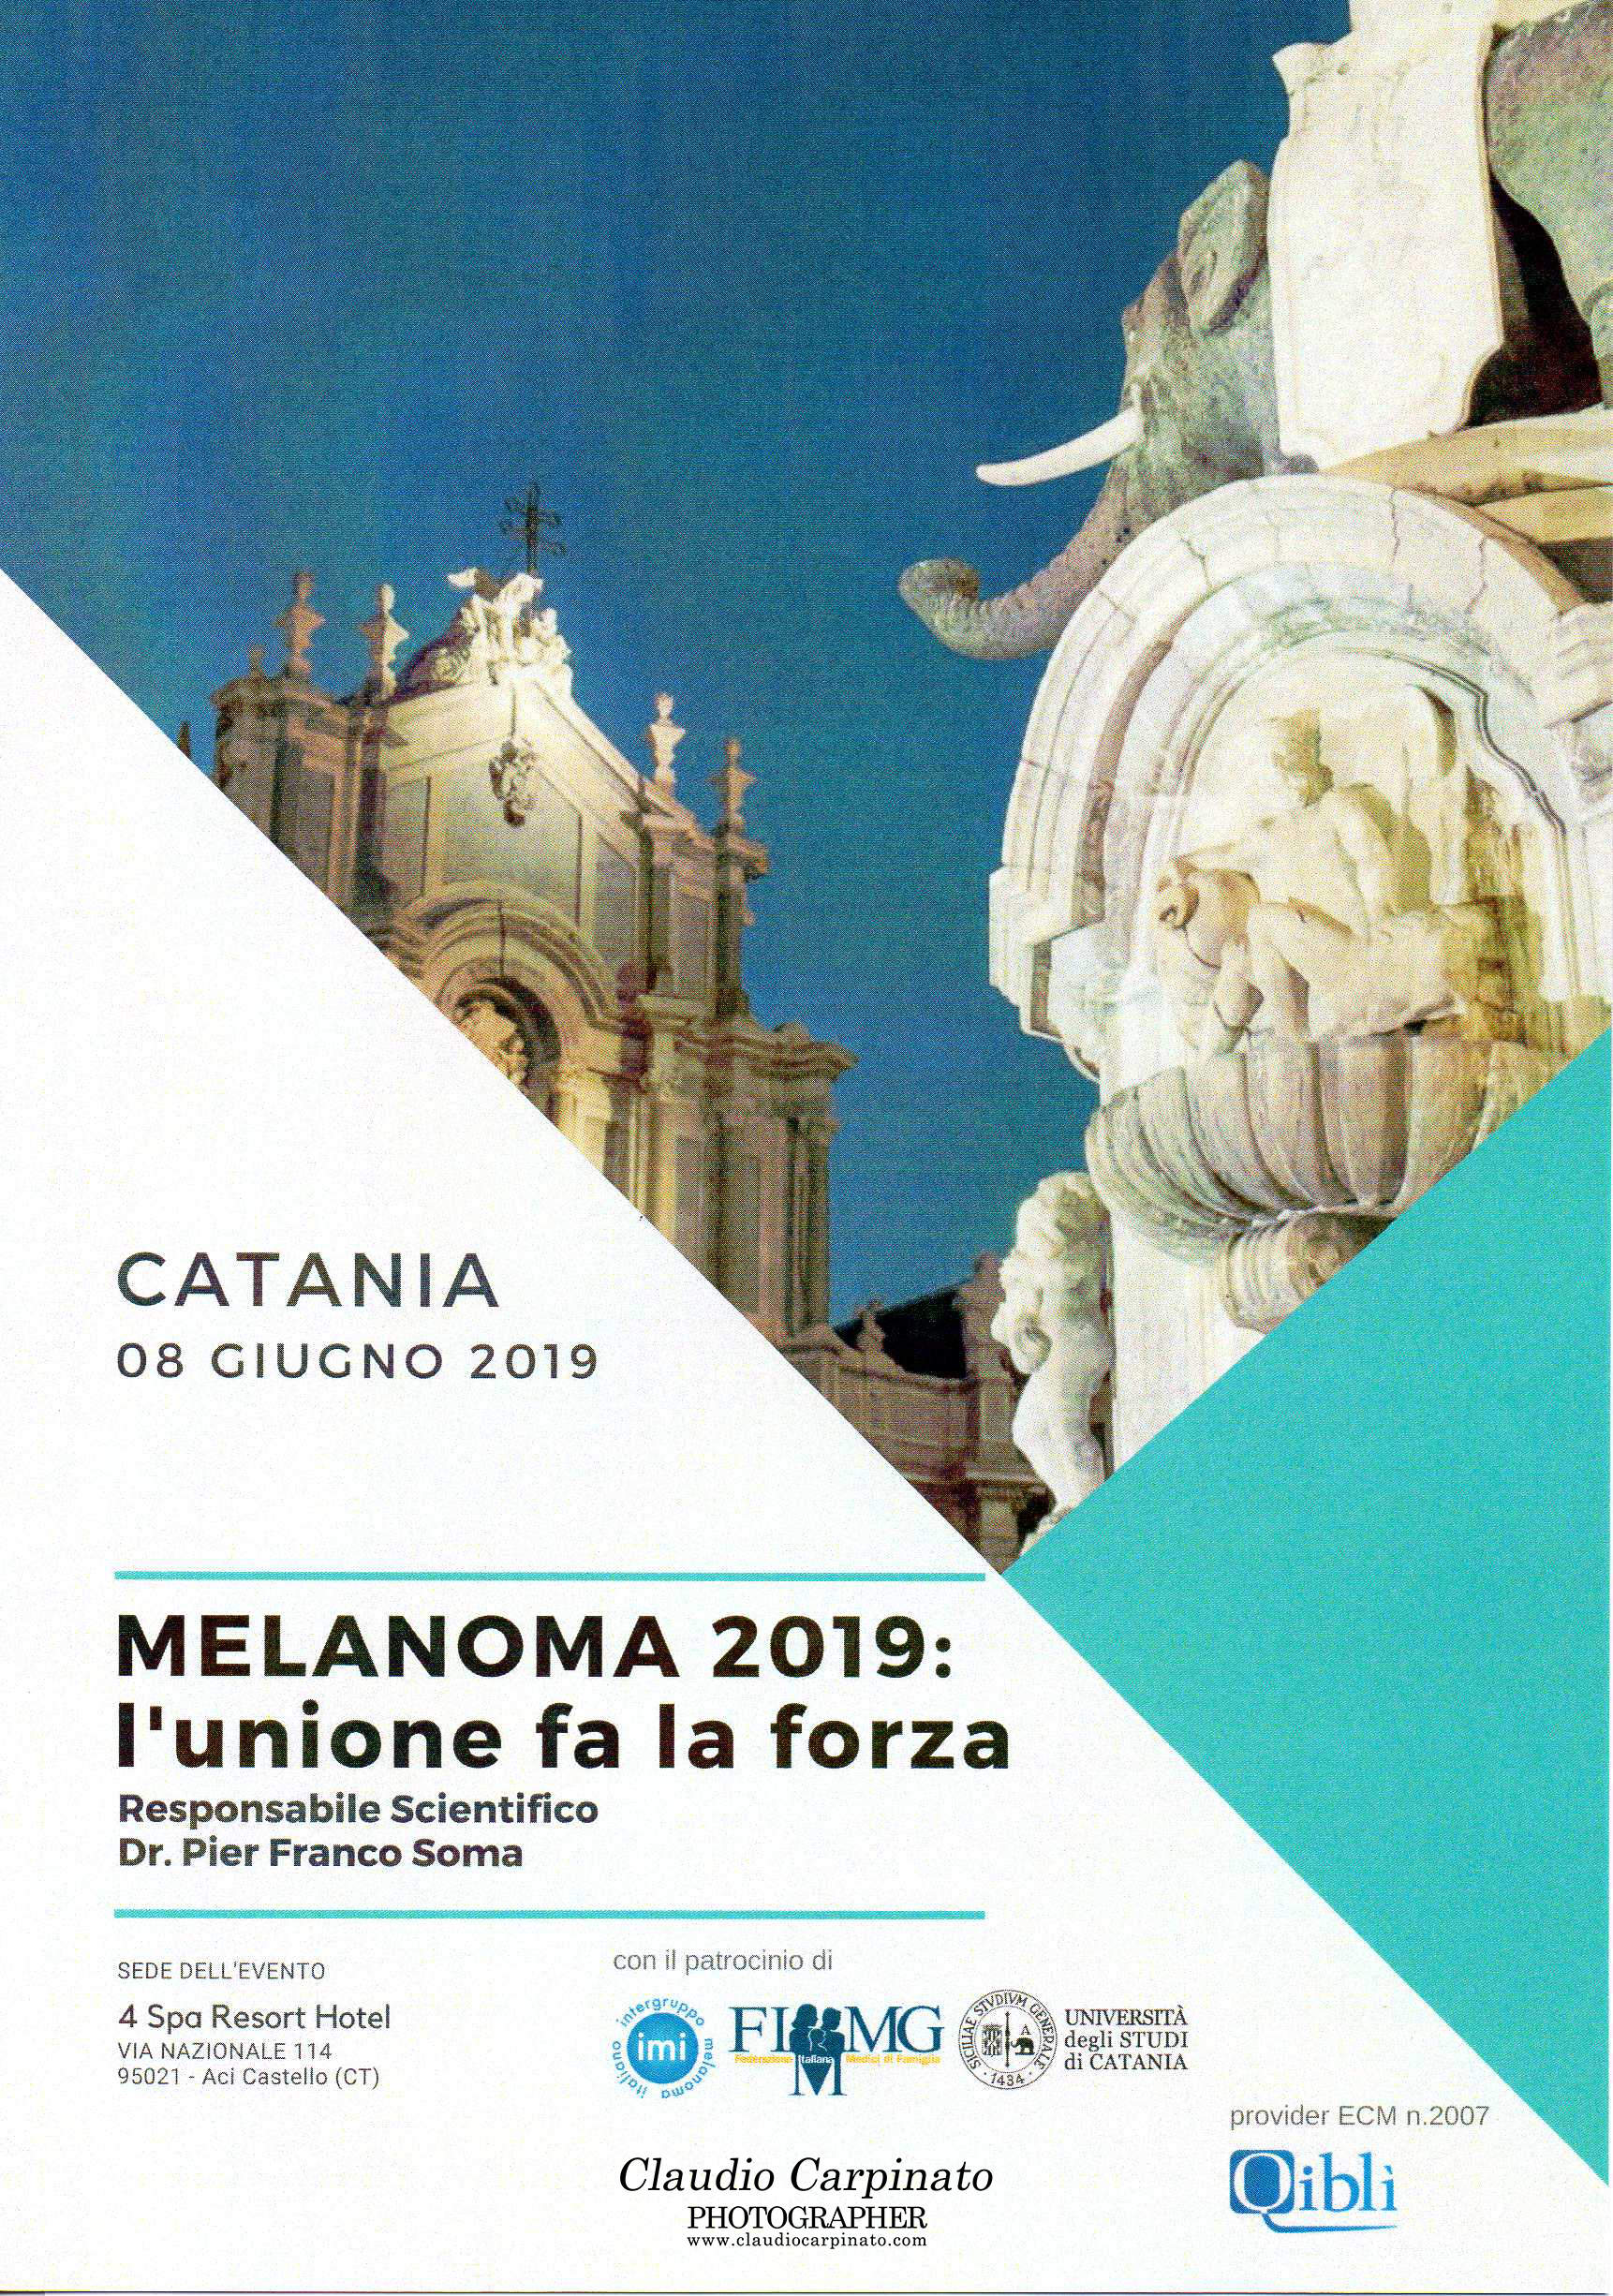 "Melanoma 2019" Clinica Gibiino # 4SPA Resort Hotel - Catania 06.2019